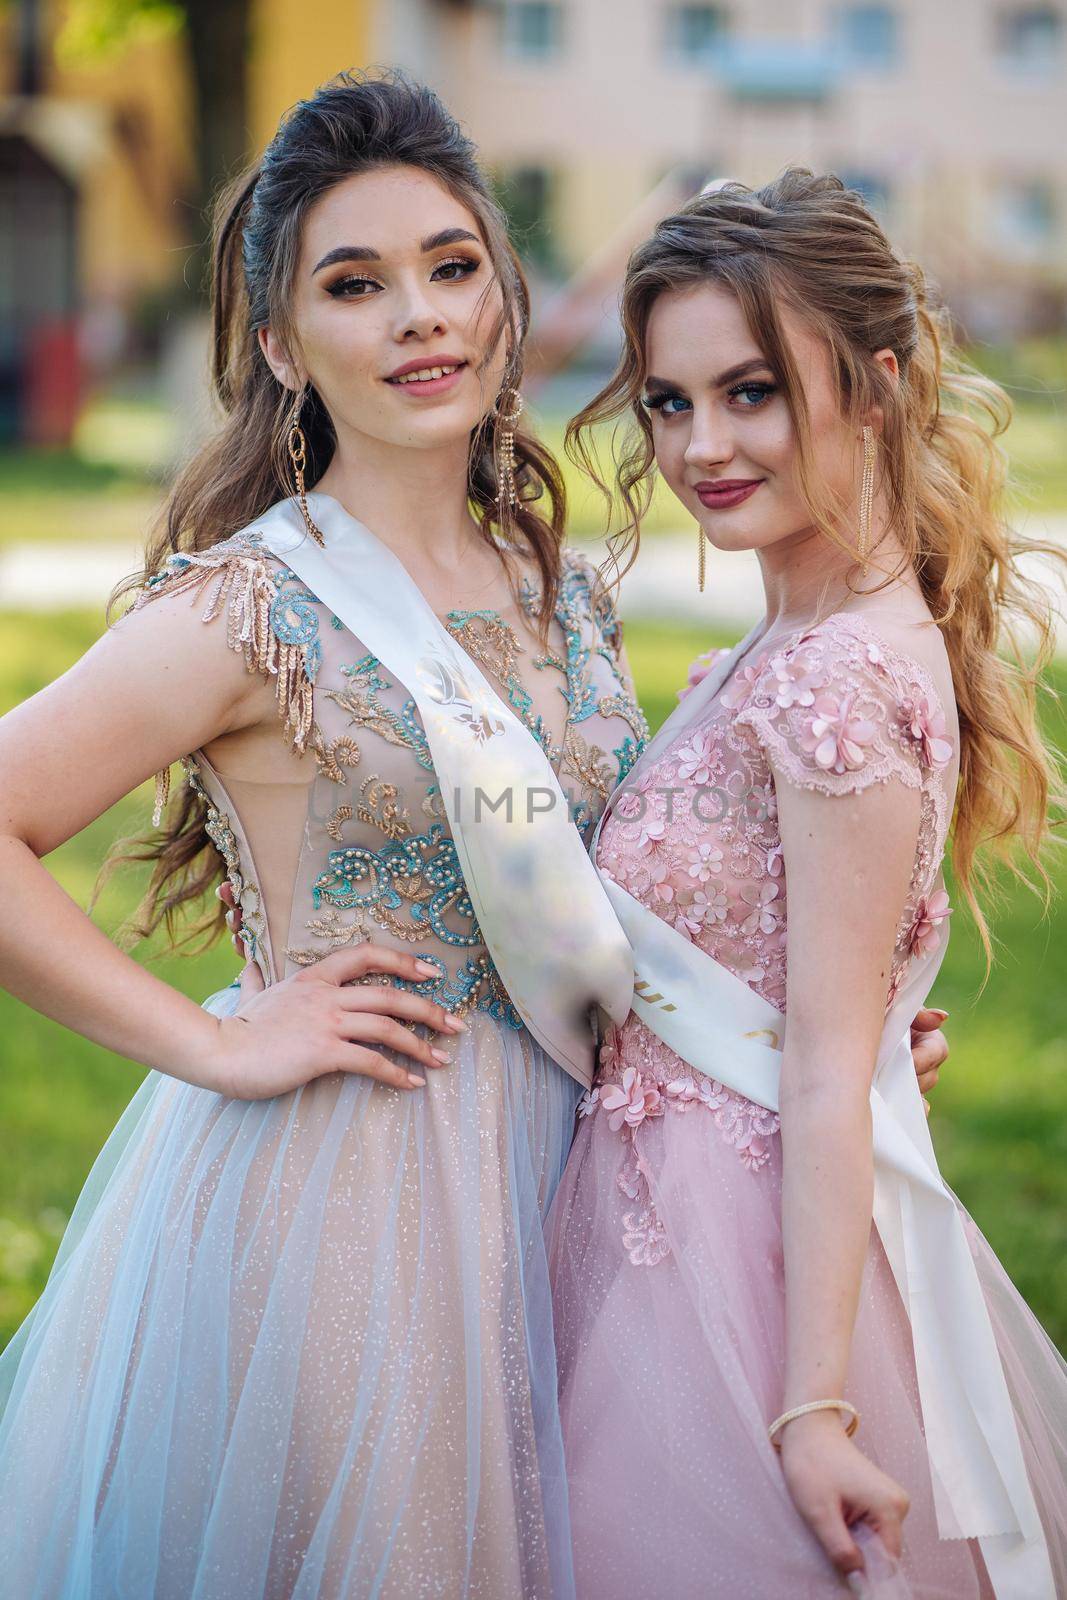 Beautiful schoolgirls in dress at the prom at school